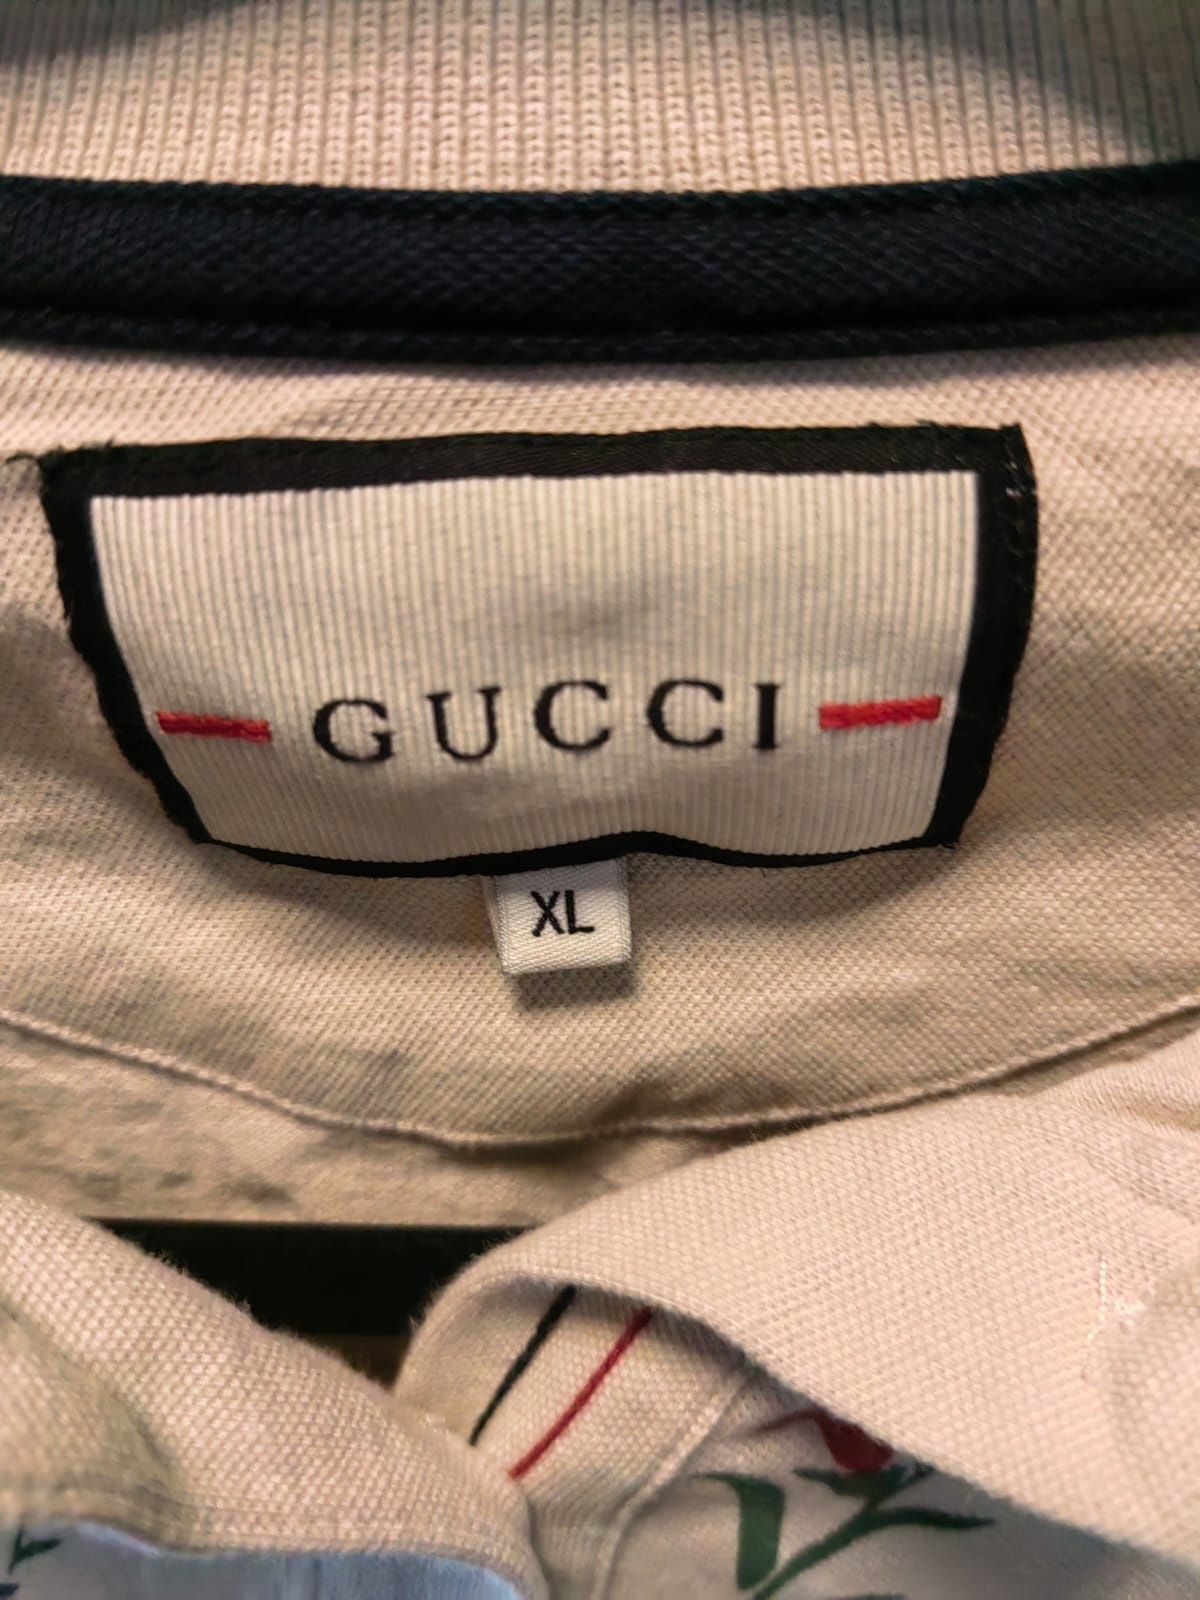 *Gucci polo rozmiar XL*